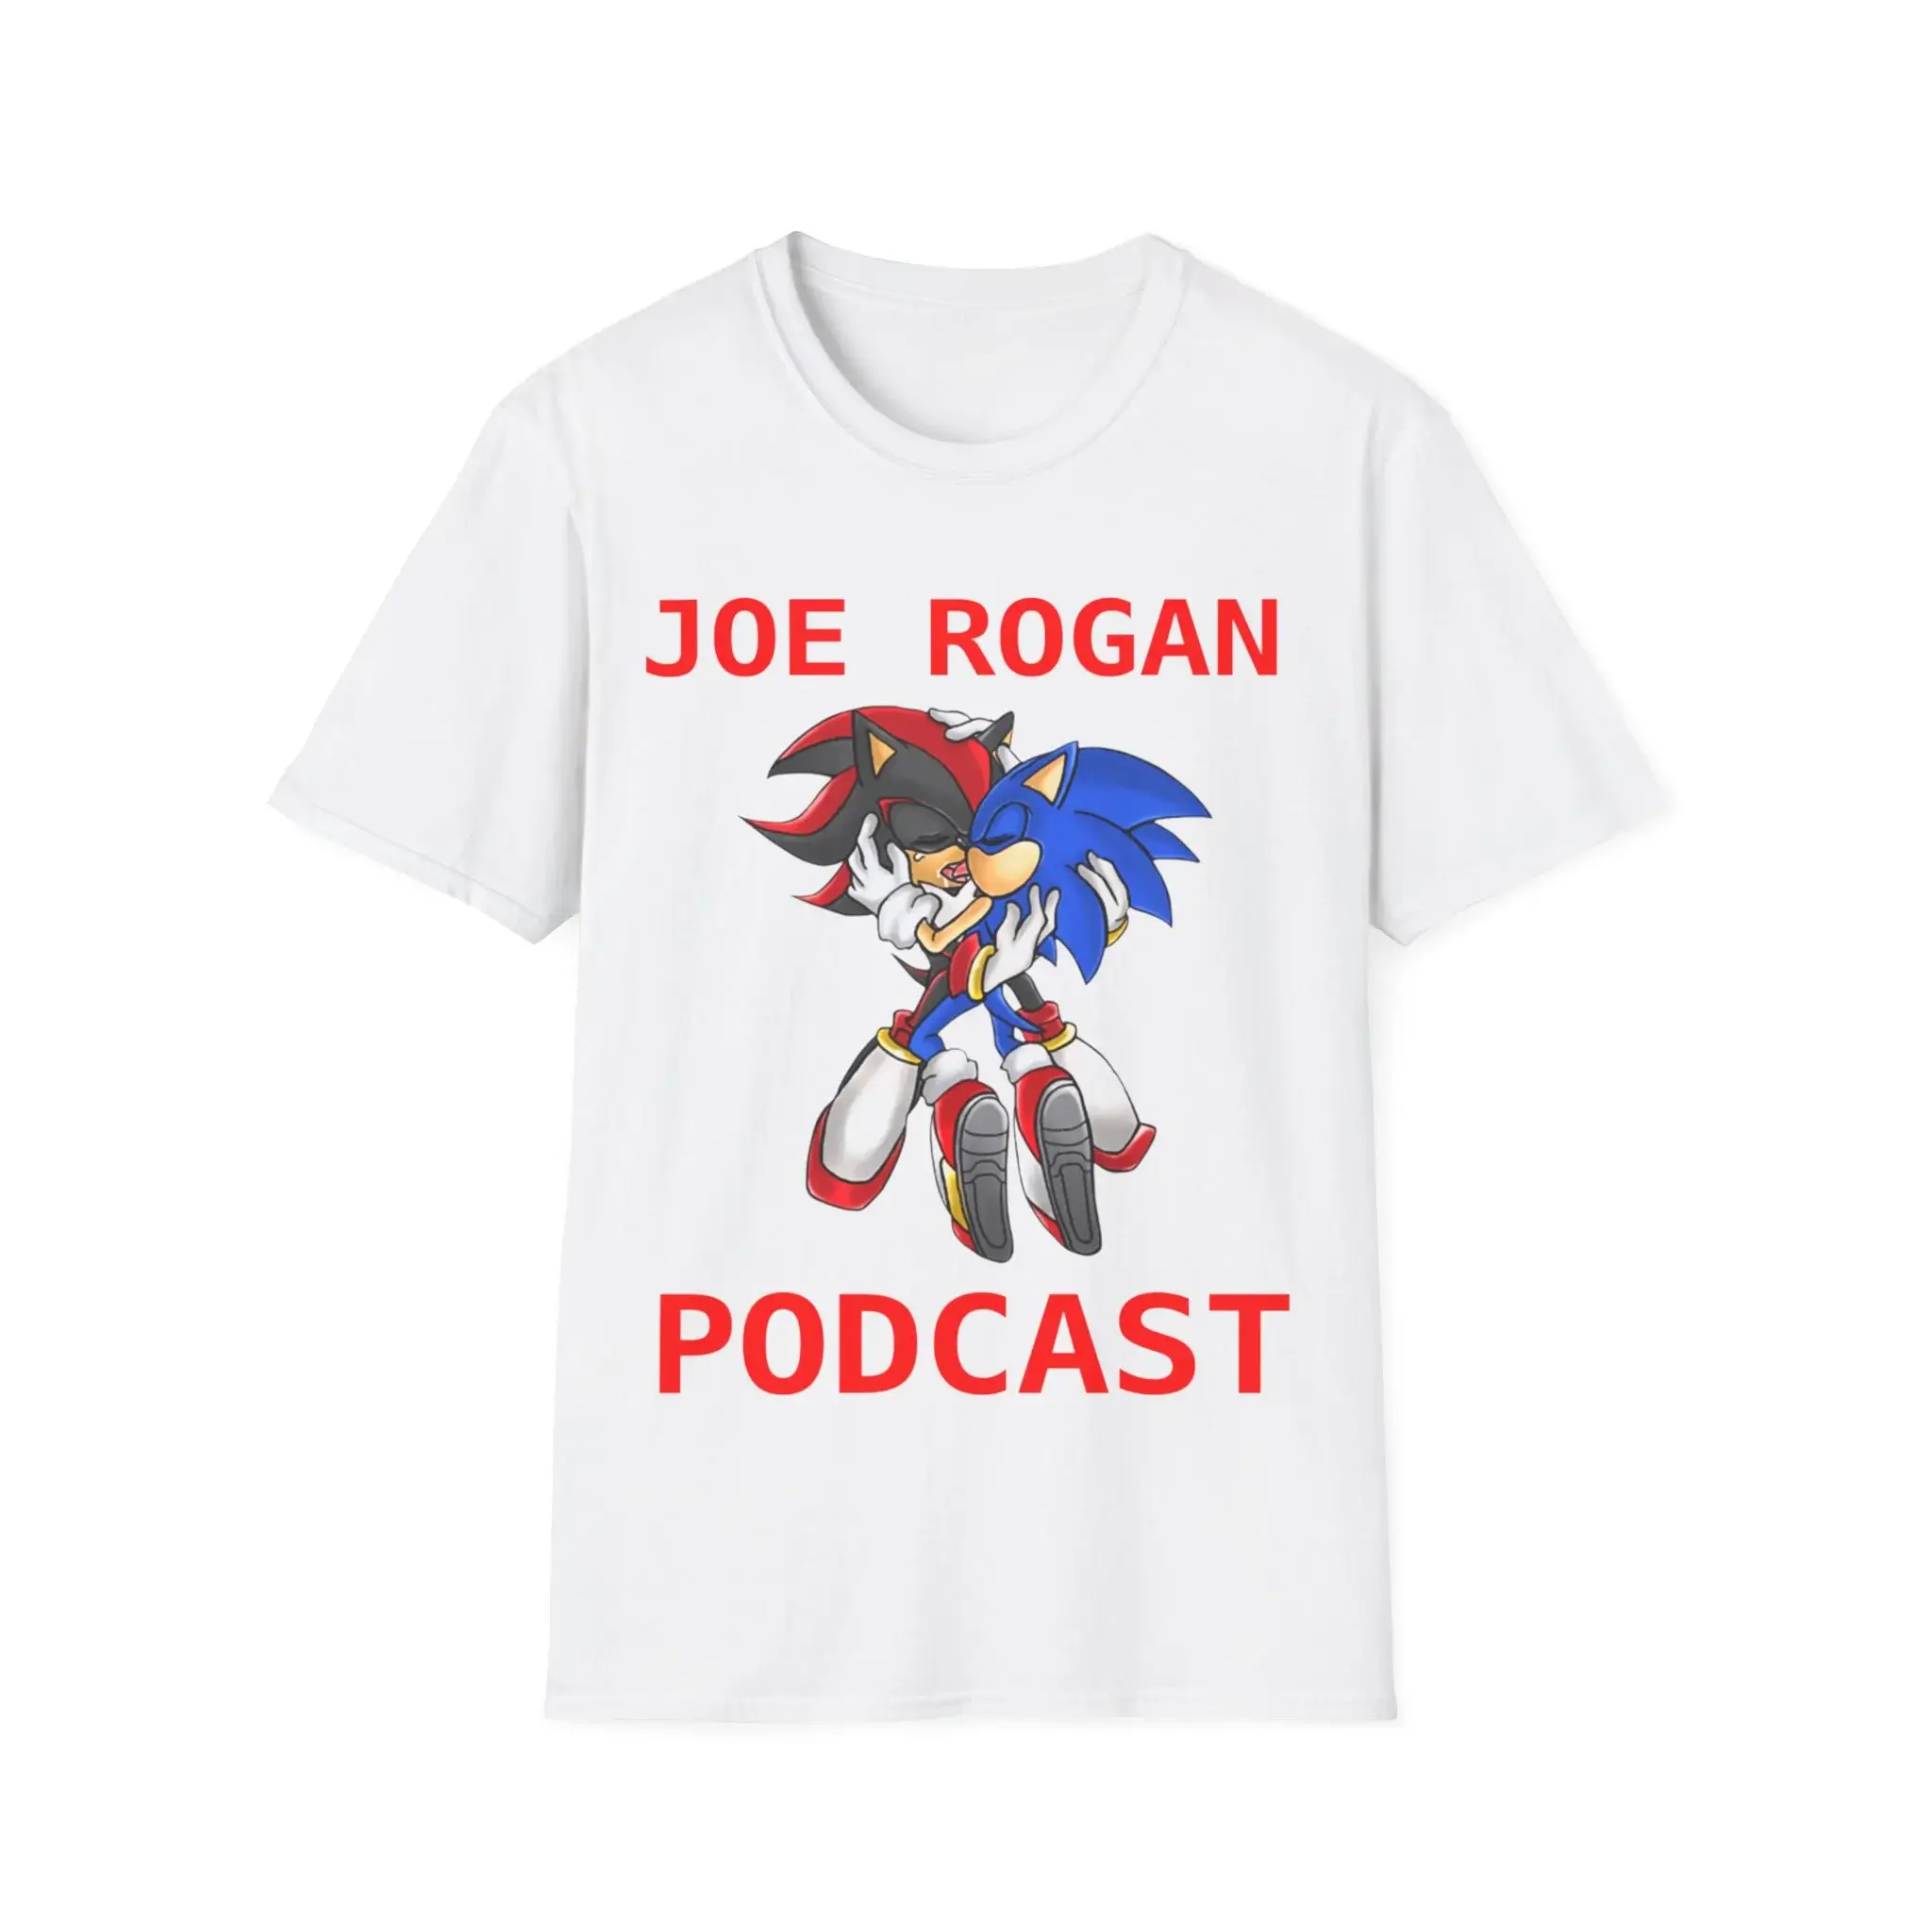 Joe Rogan Podcast shirt